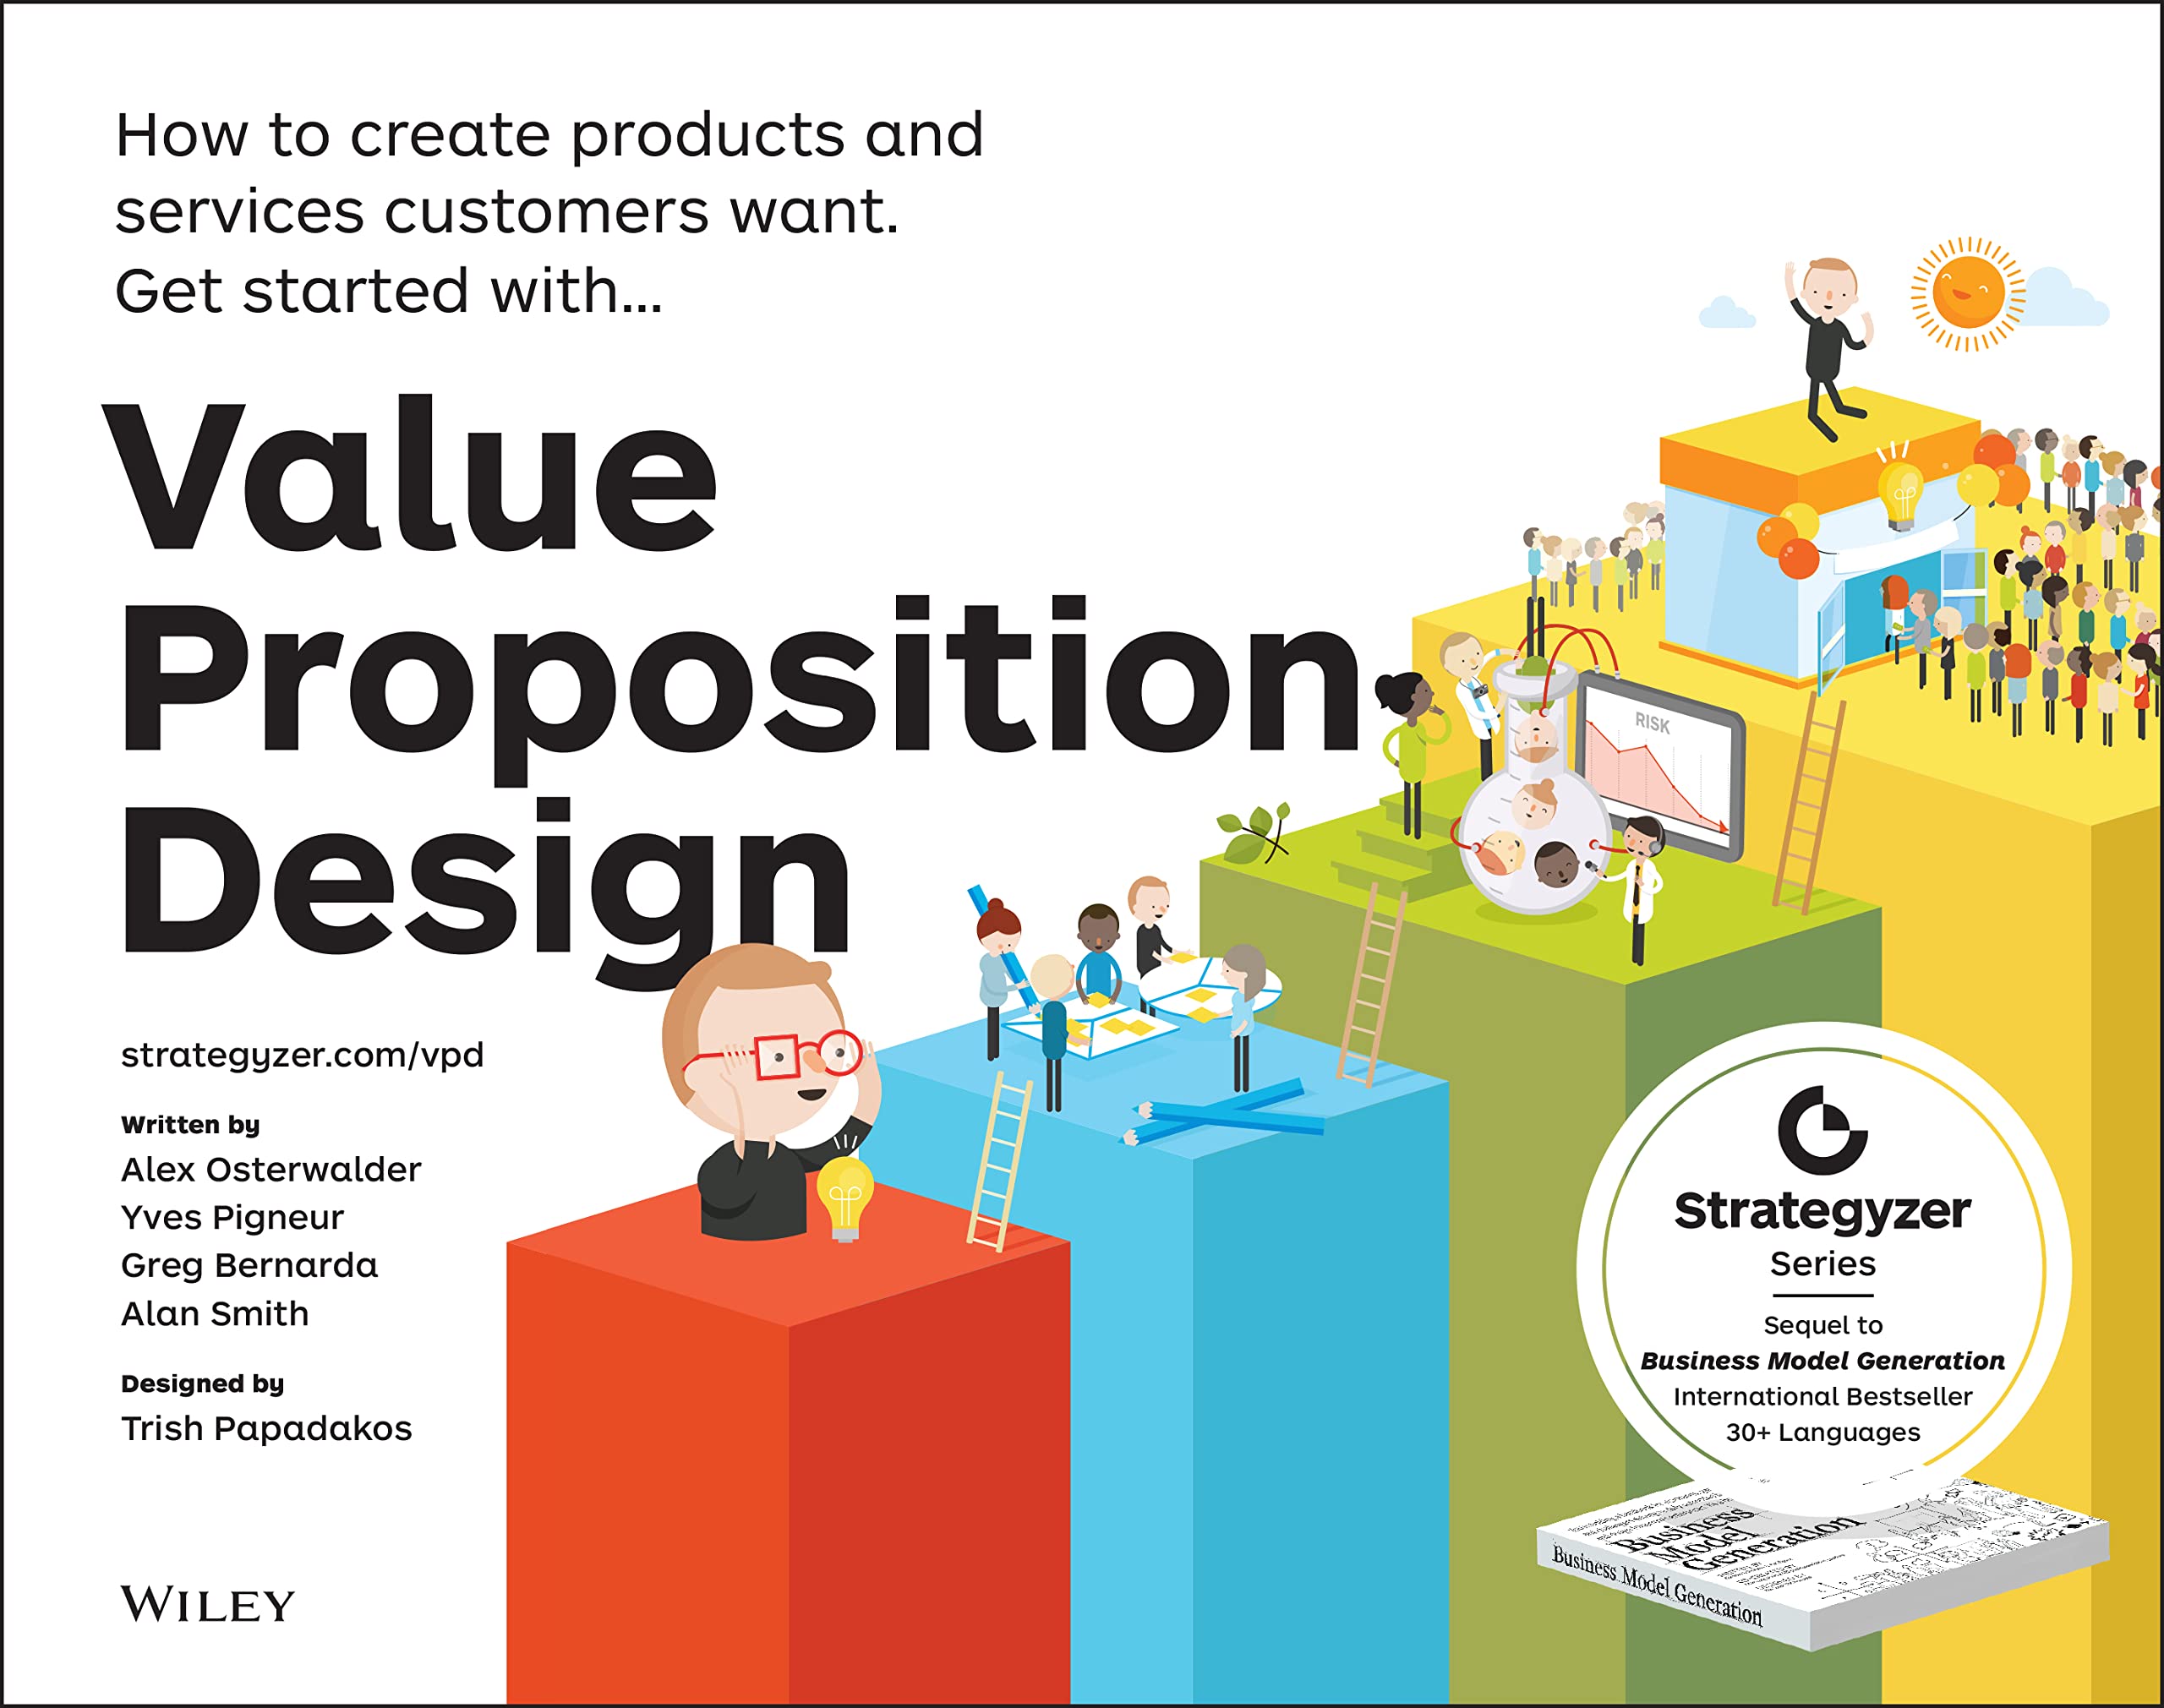 Osterwalder, Alexander: Value proposition design (2014)